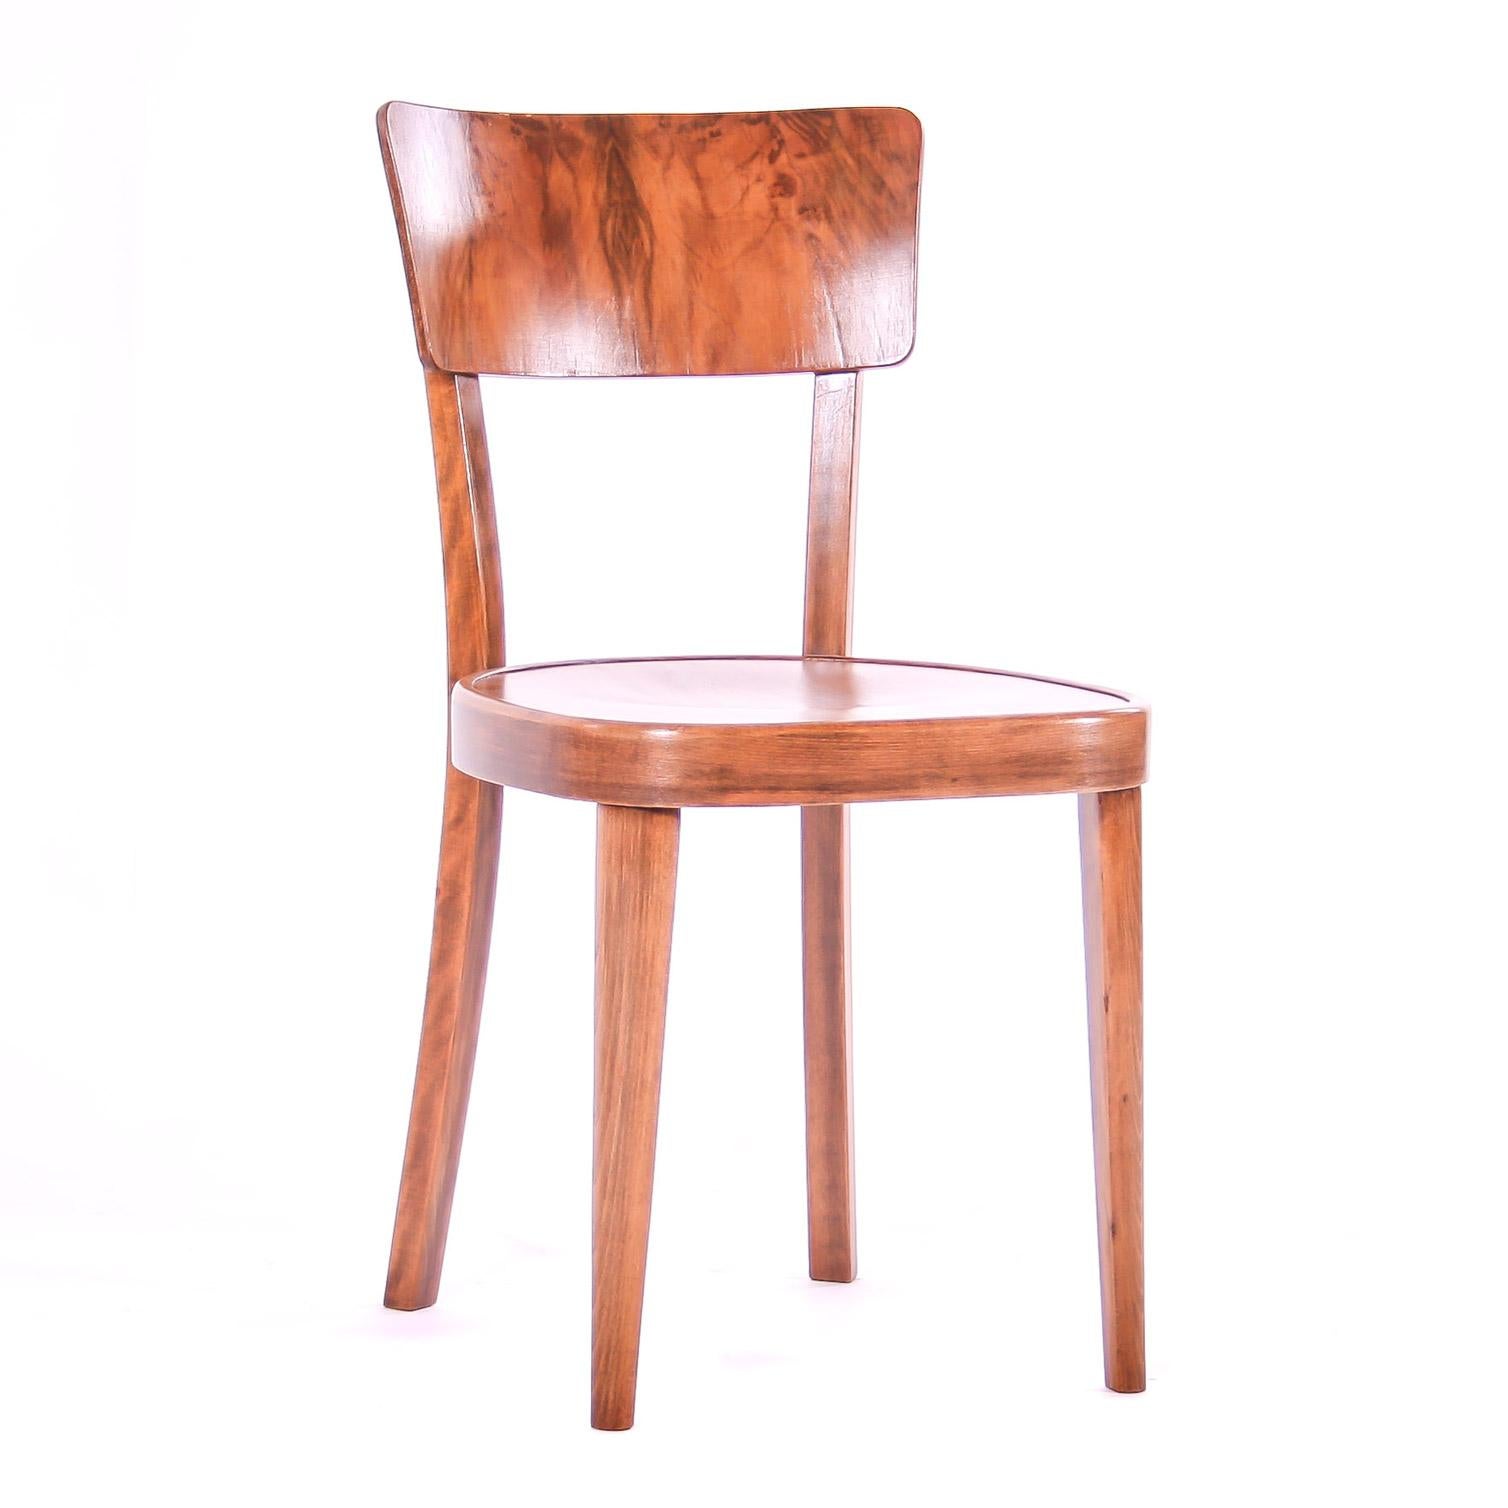 Other Czech Interwar Avantgard Design Dining Chairs by Jindrich Halabala 'UP Zavody' For Sale